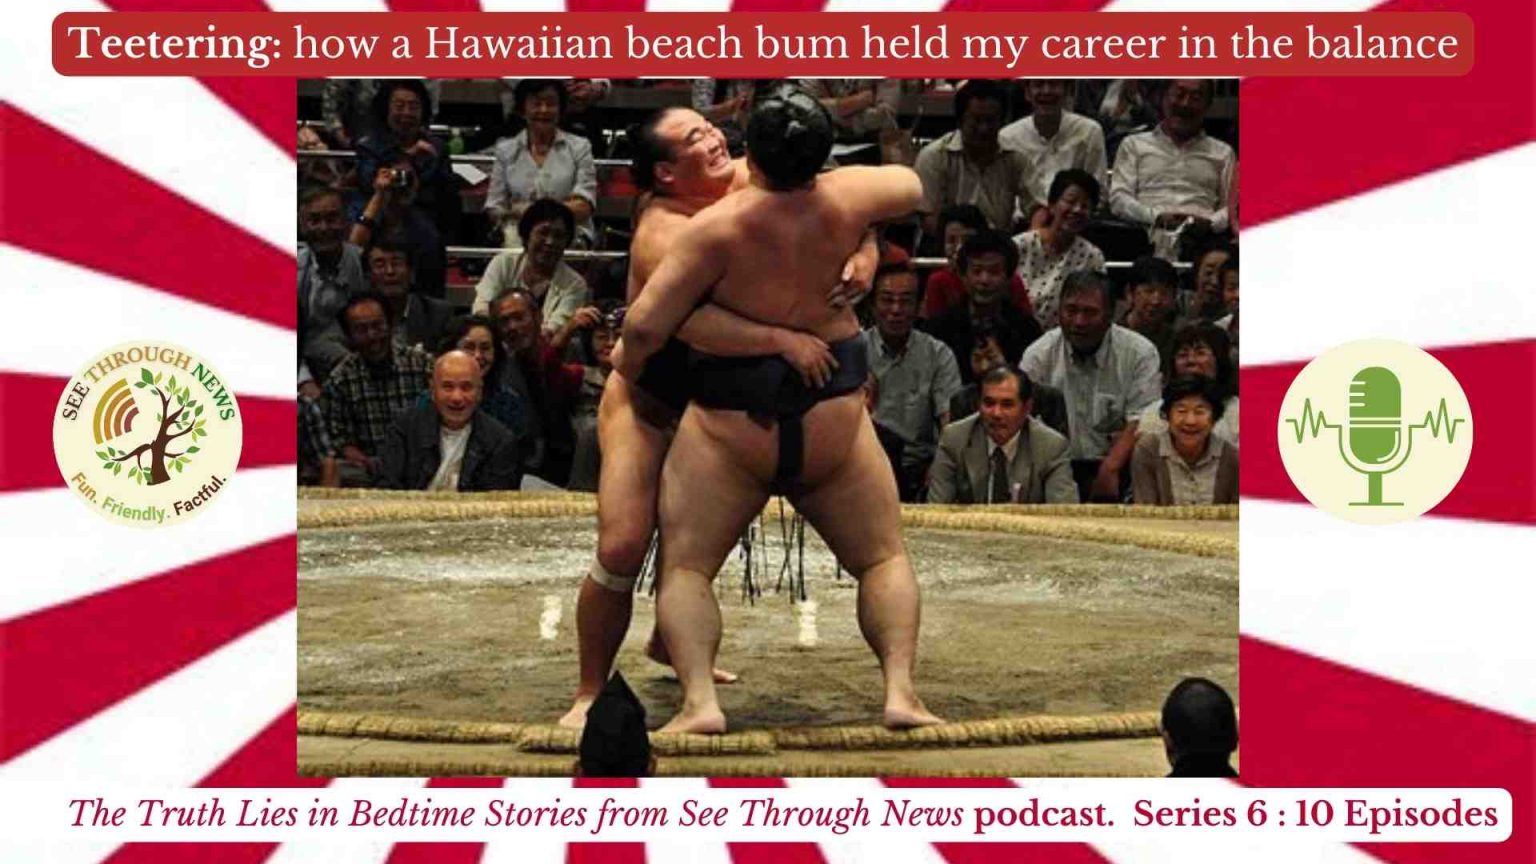 Japan podcast sumo international relations tv news journalism career geopolitics akebono